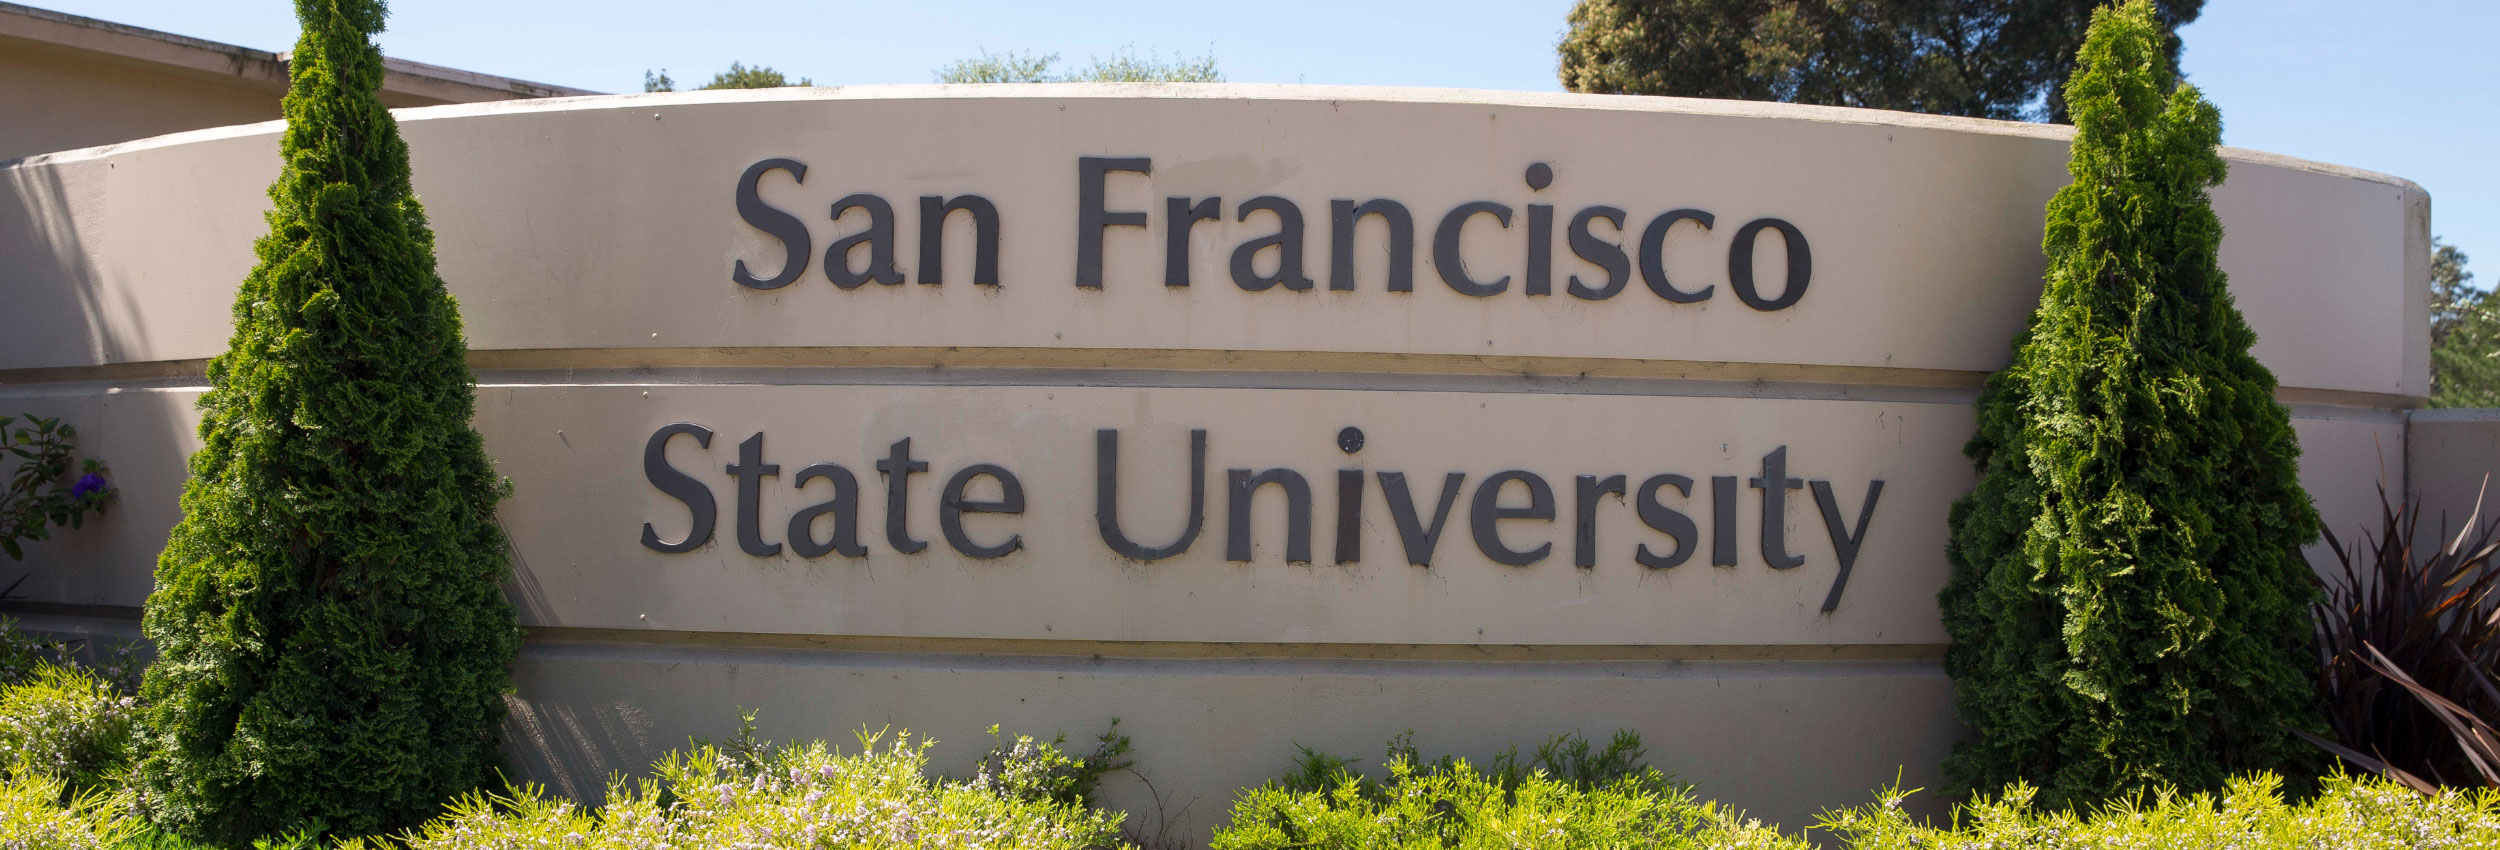 San Francisco State University 